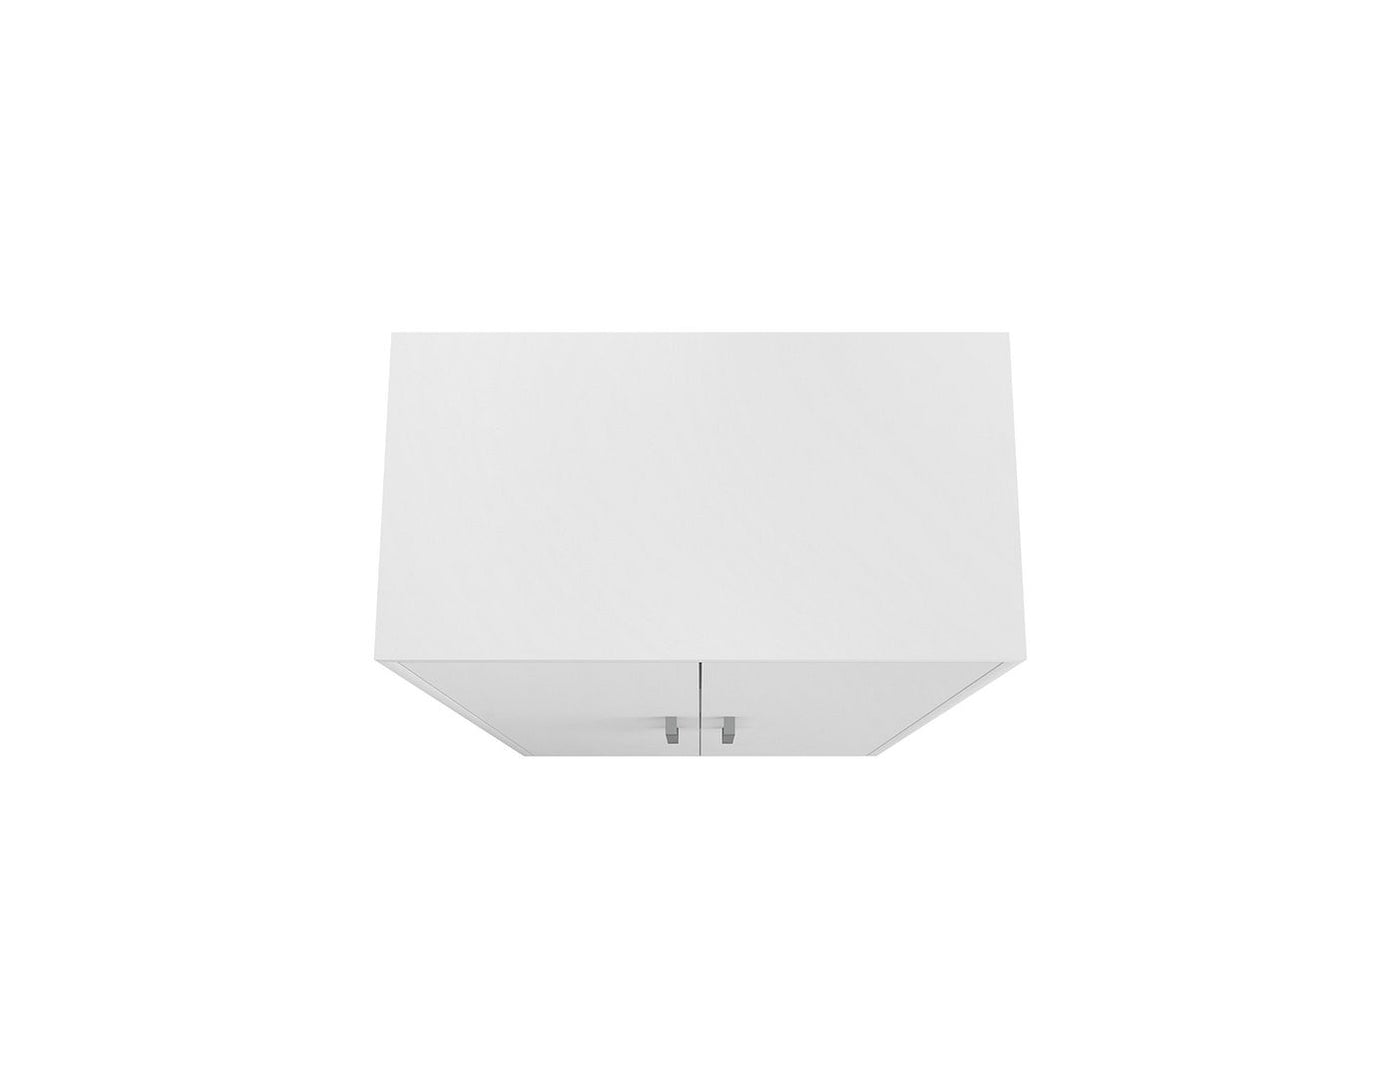 Lunde Storage Cabinet - White - Set of 3